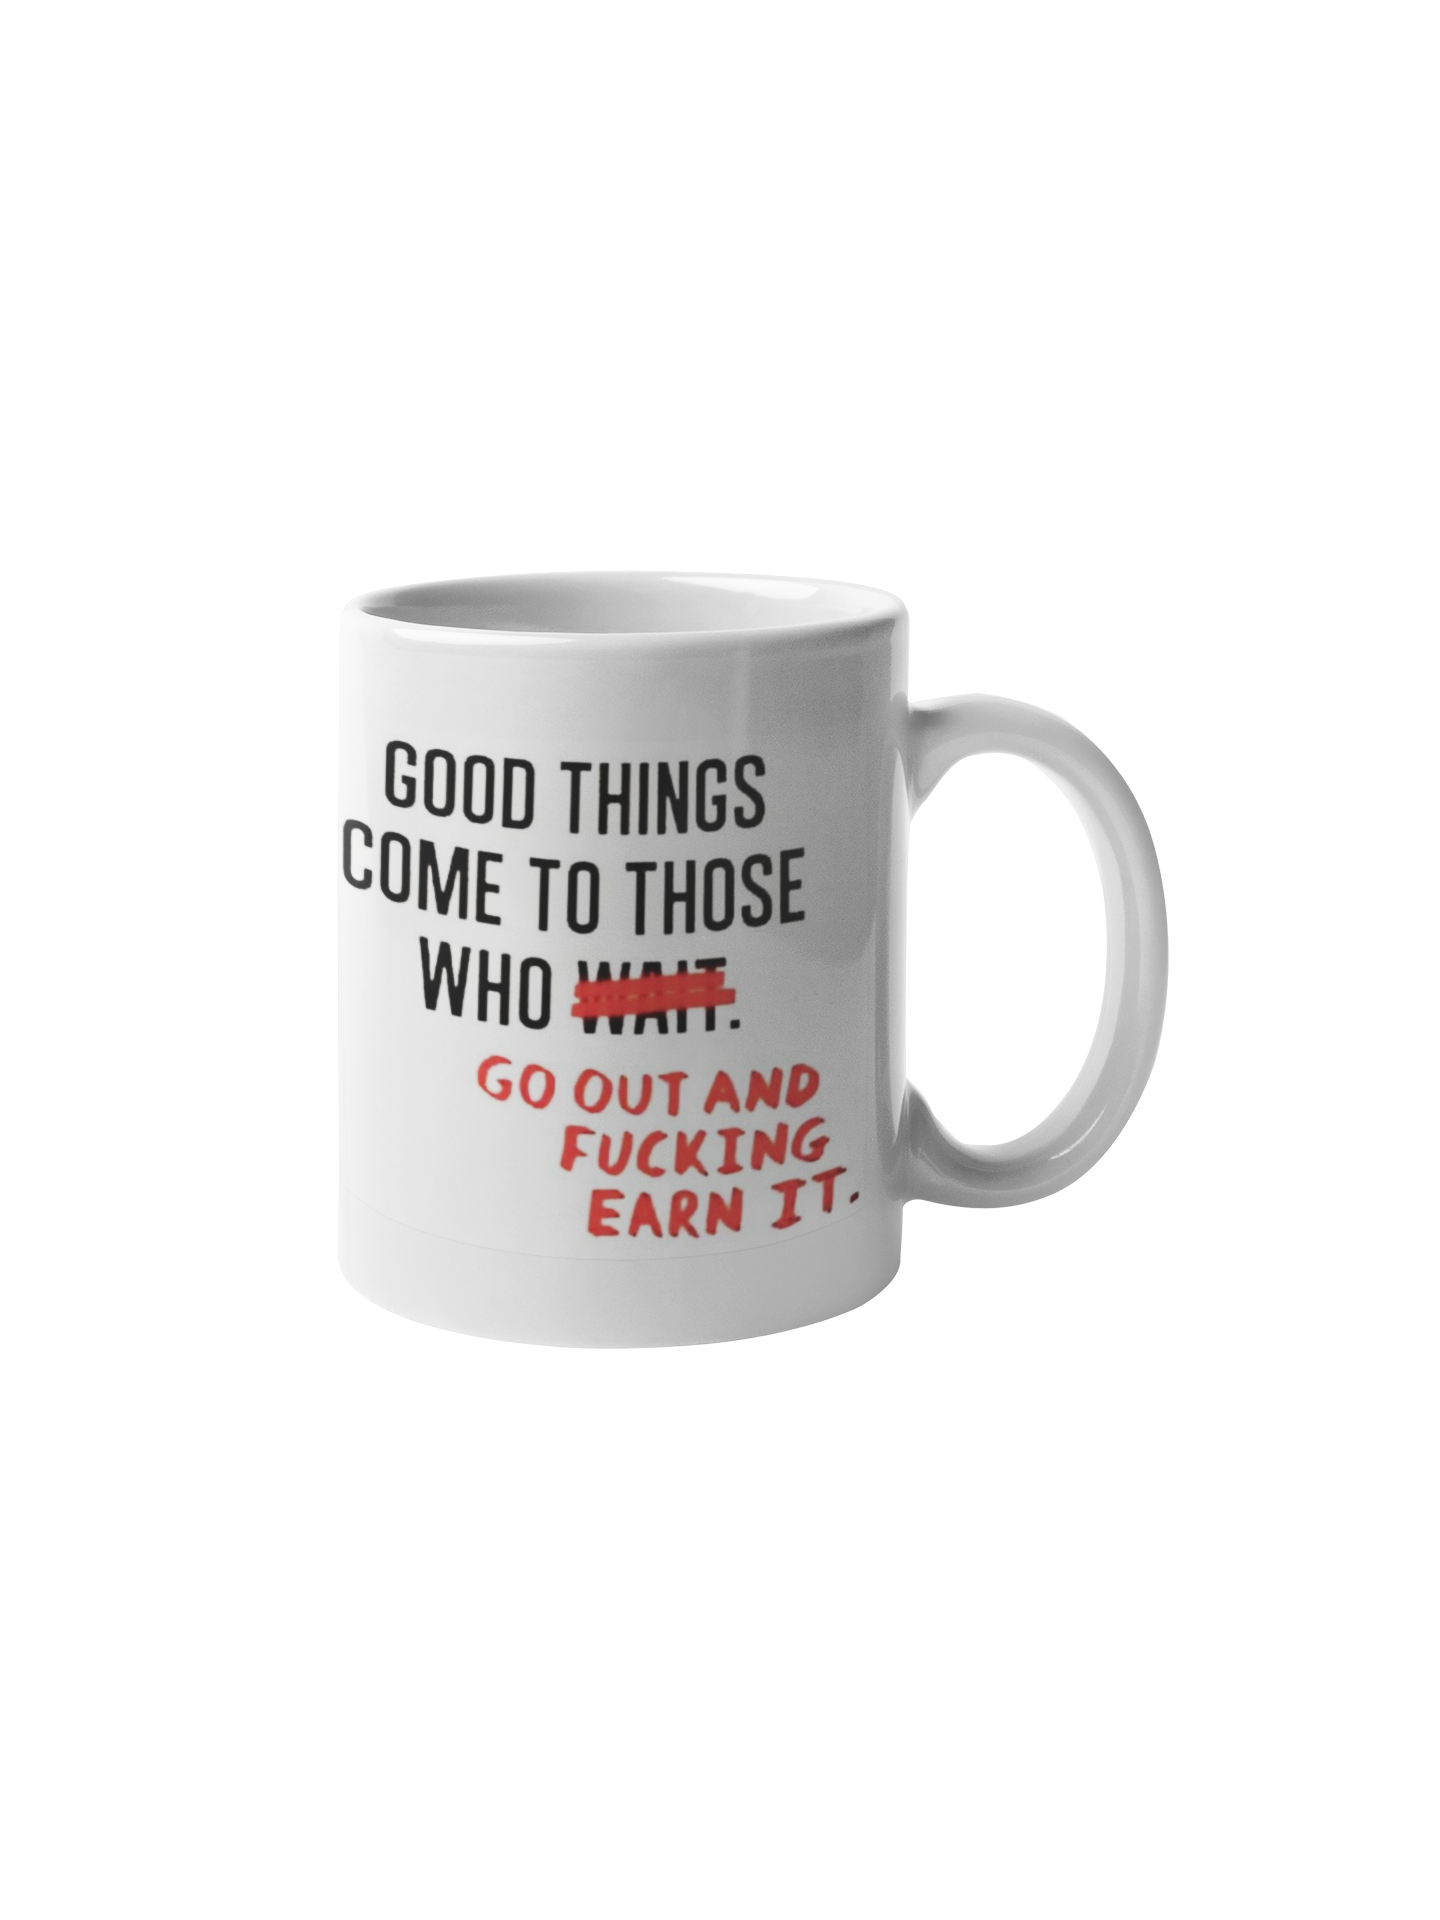 Good things happen mug